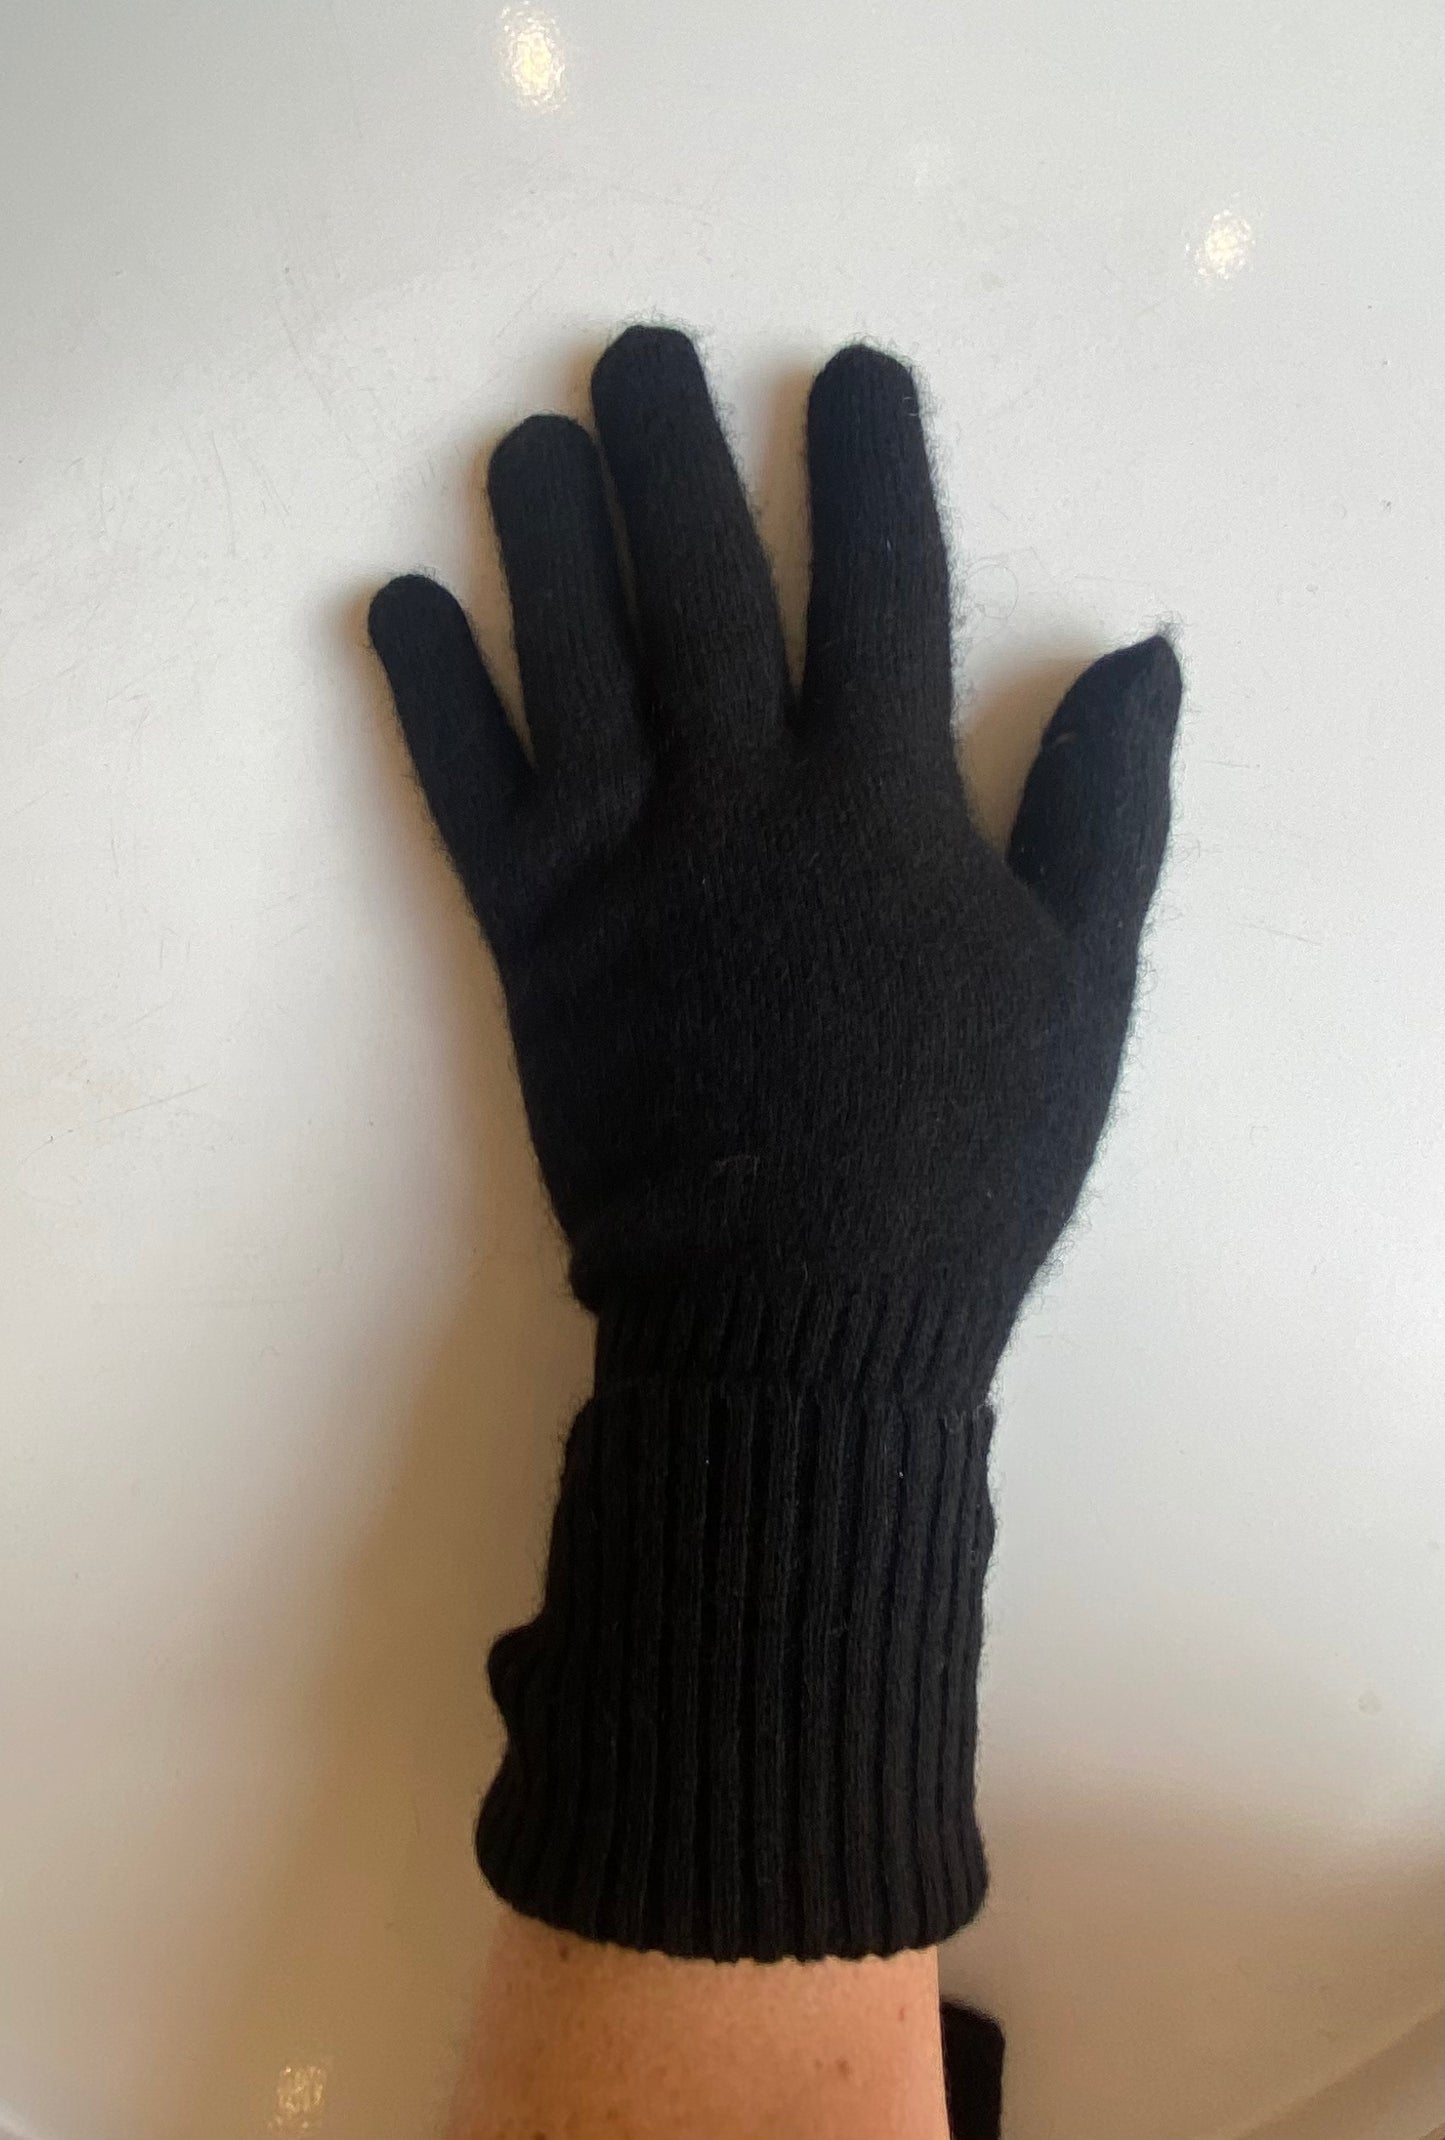 W+W Cashmere Texting Gloves